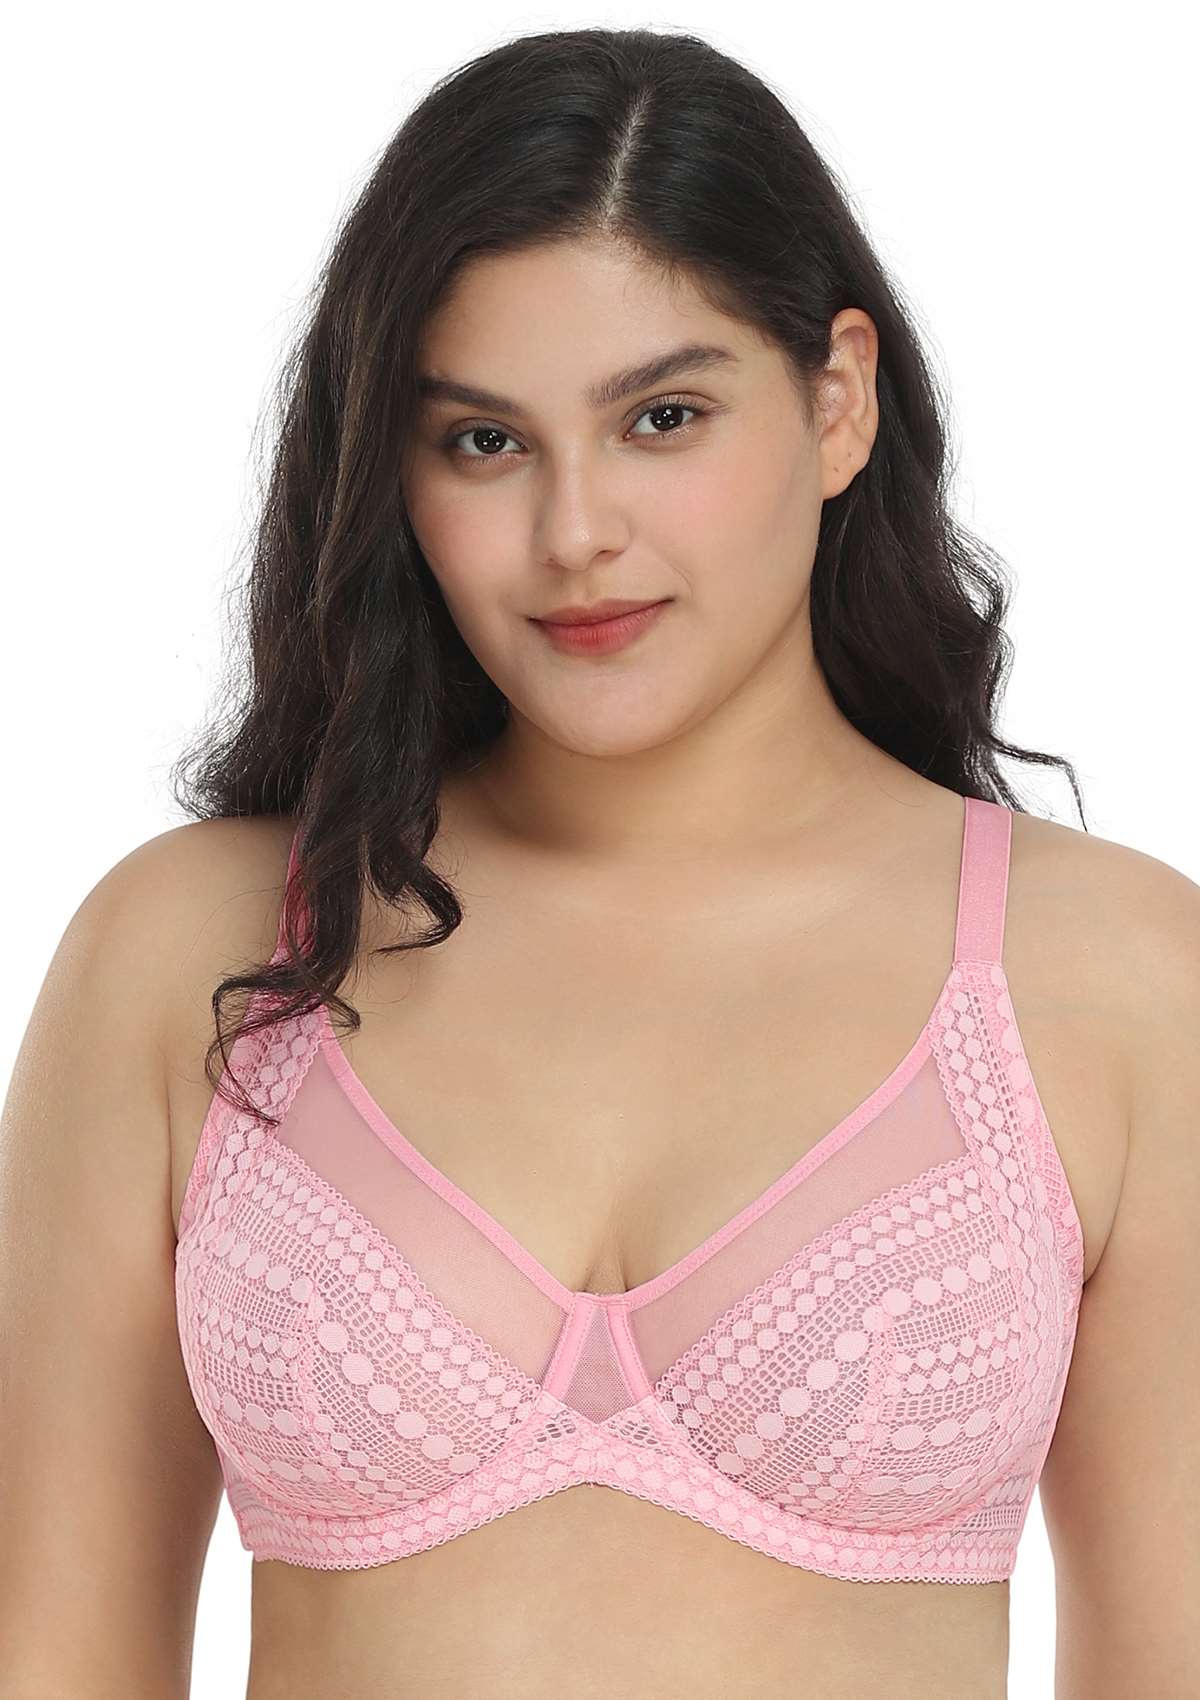 HSIA Heroine Lace Unlined Bra: Bra That Hides Back Fat - Plus Size - Pink / 36 / C